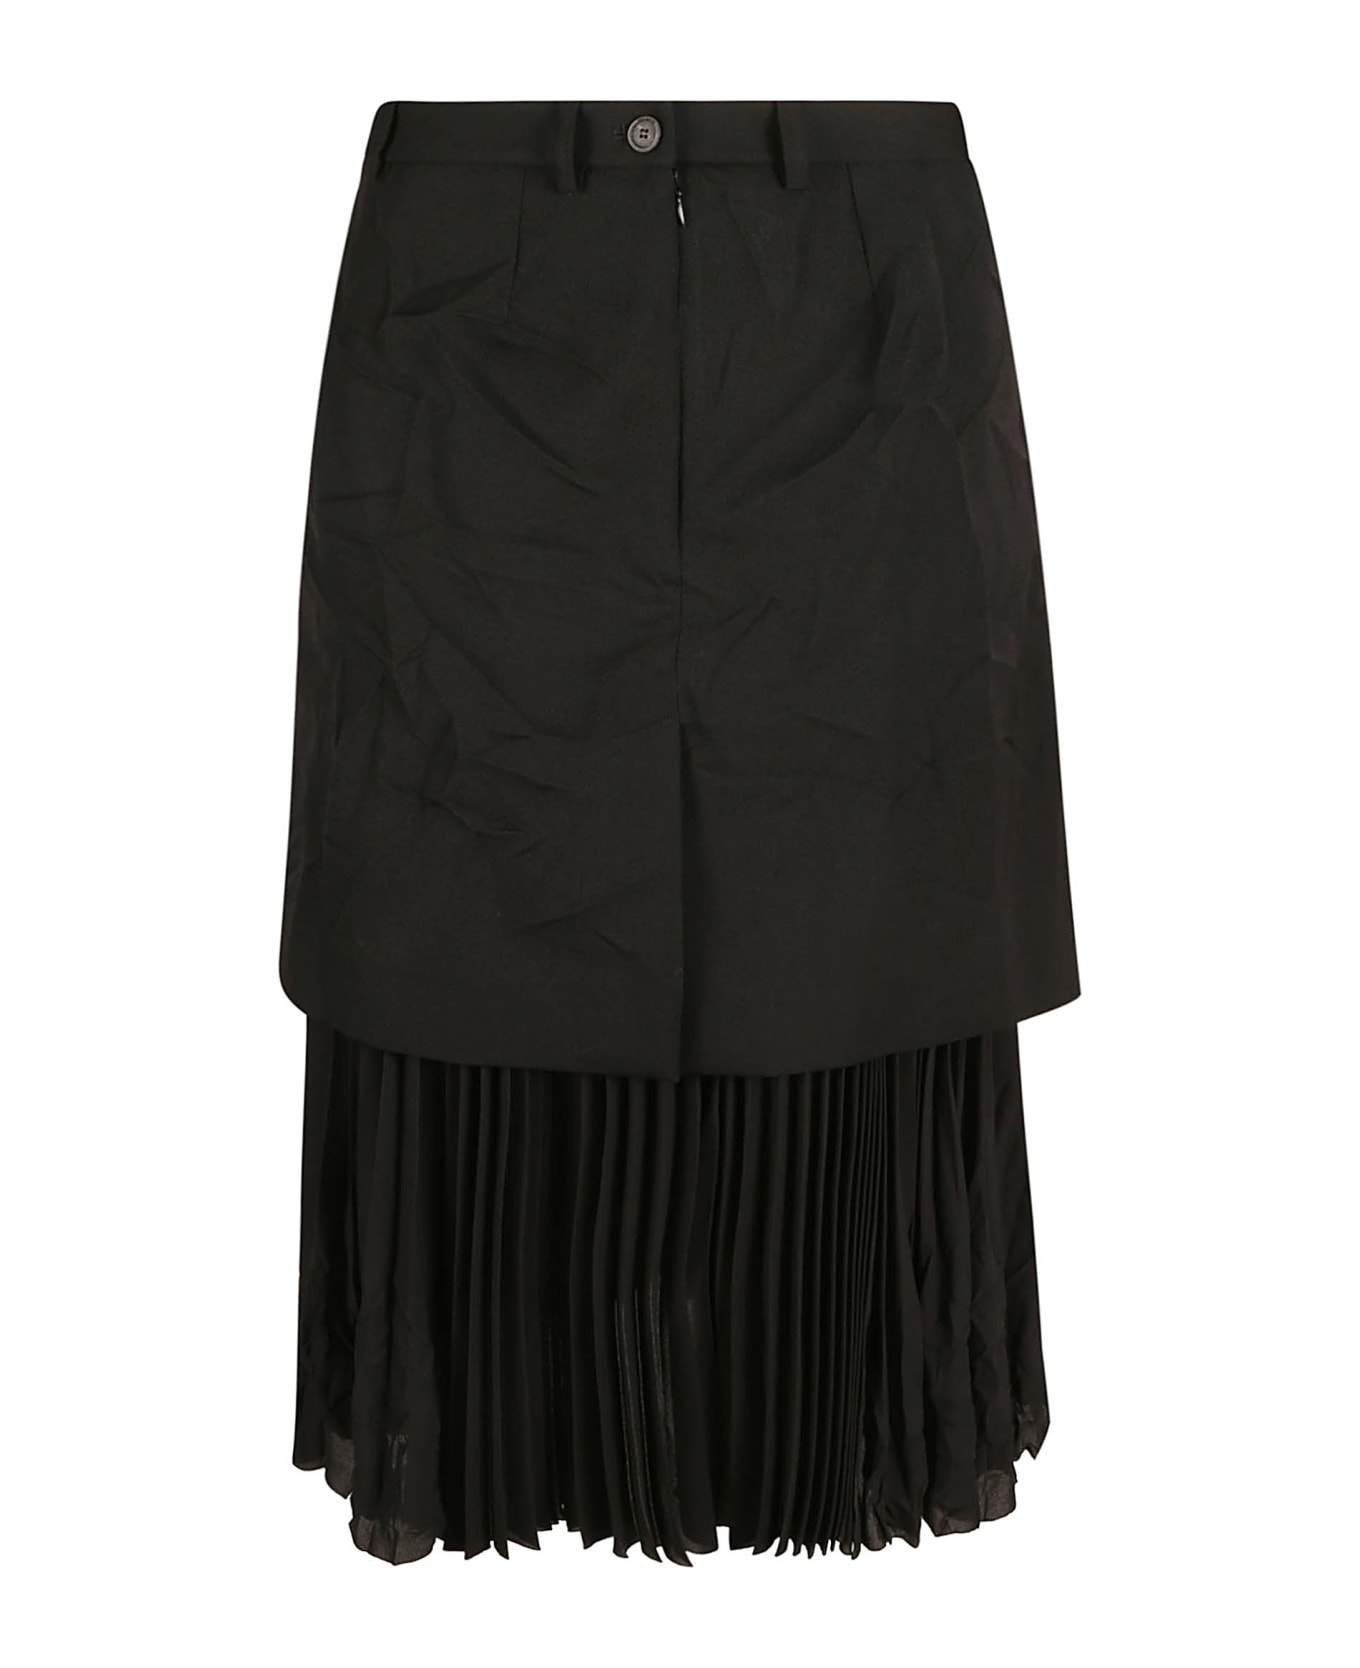 Balenciaga Layered Skirt - Black